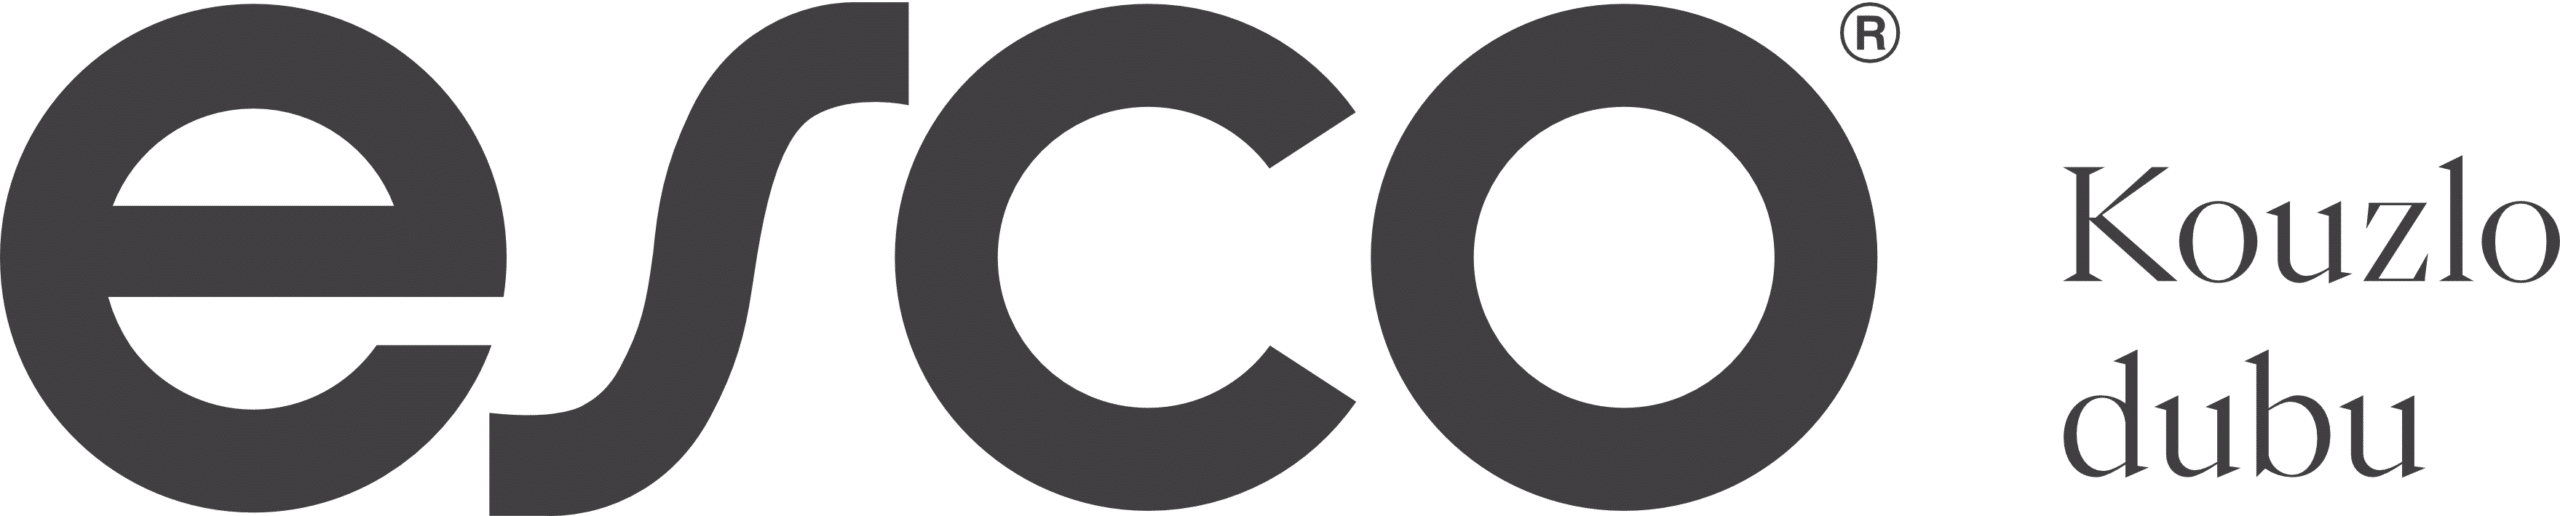 Esco-logo-2024-cmyk